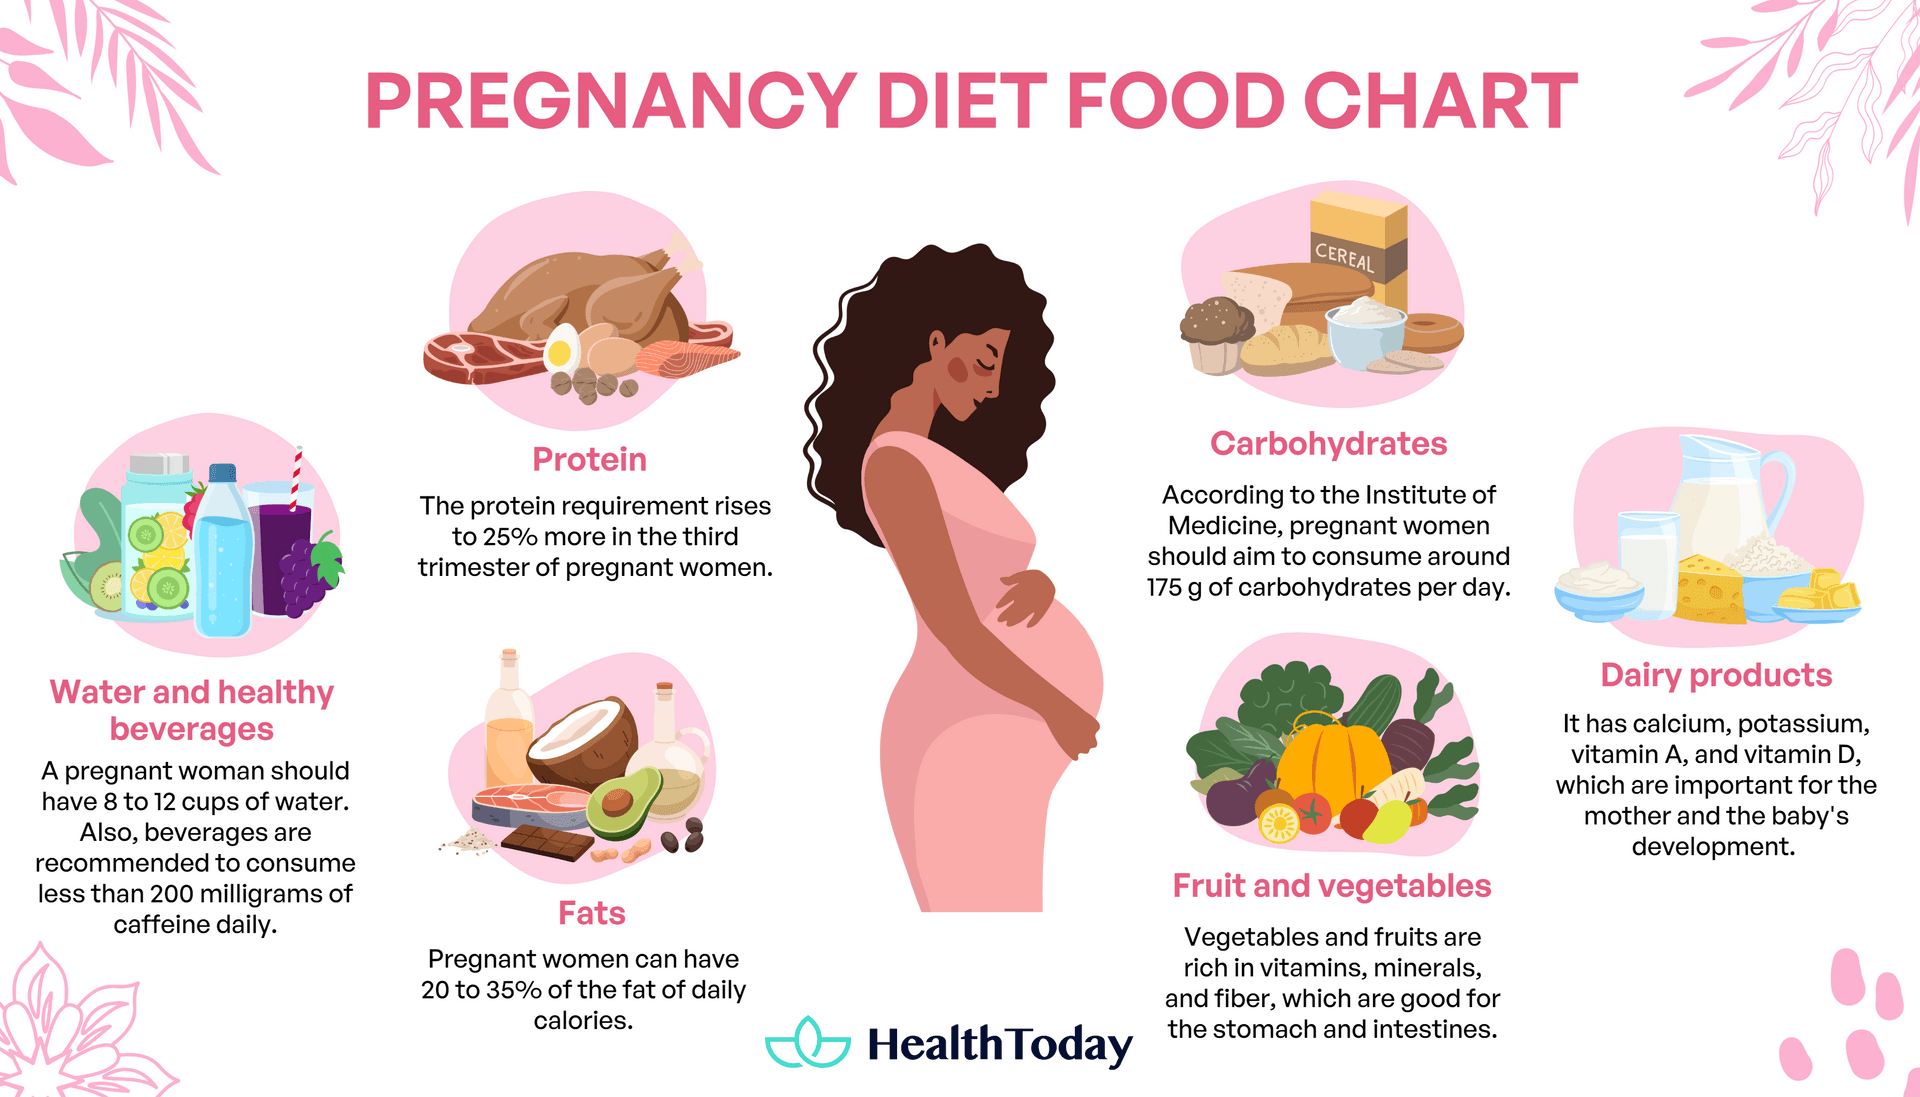 Pregnancy diet food chart